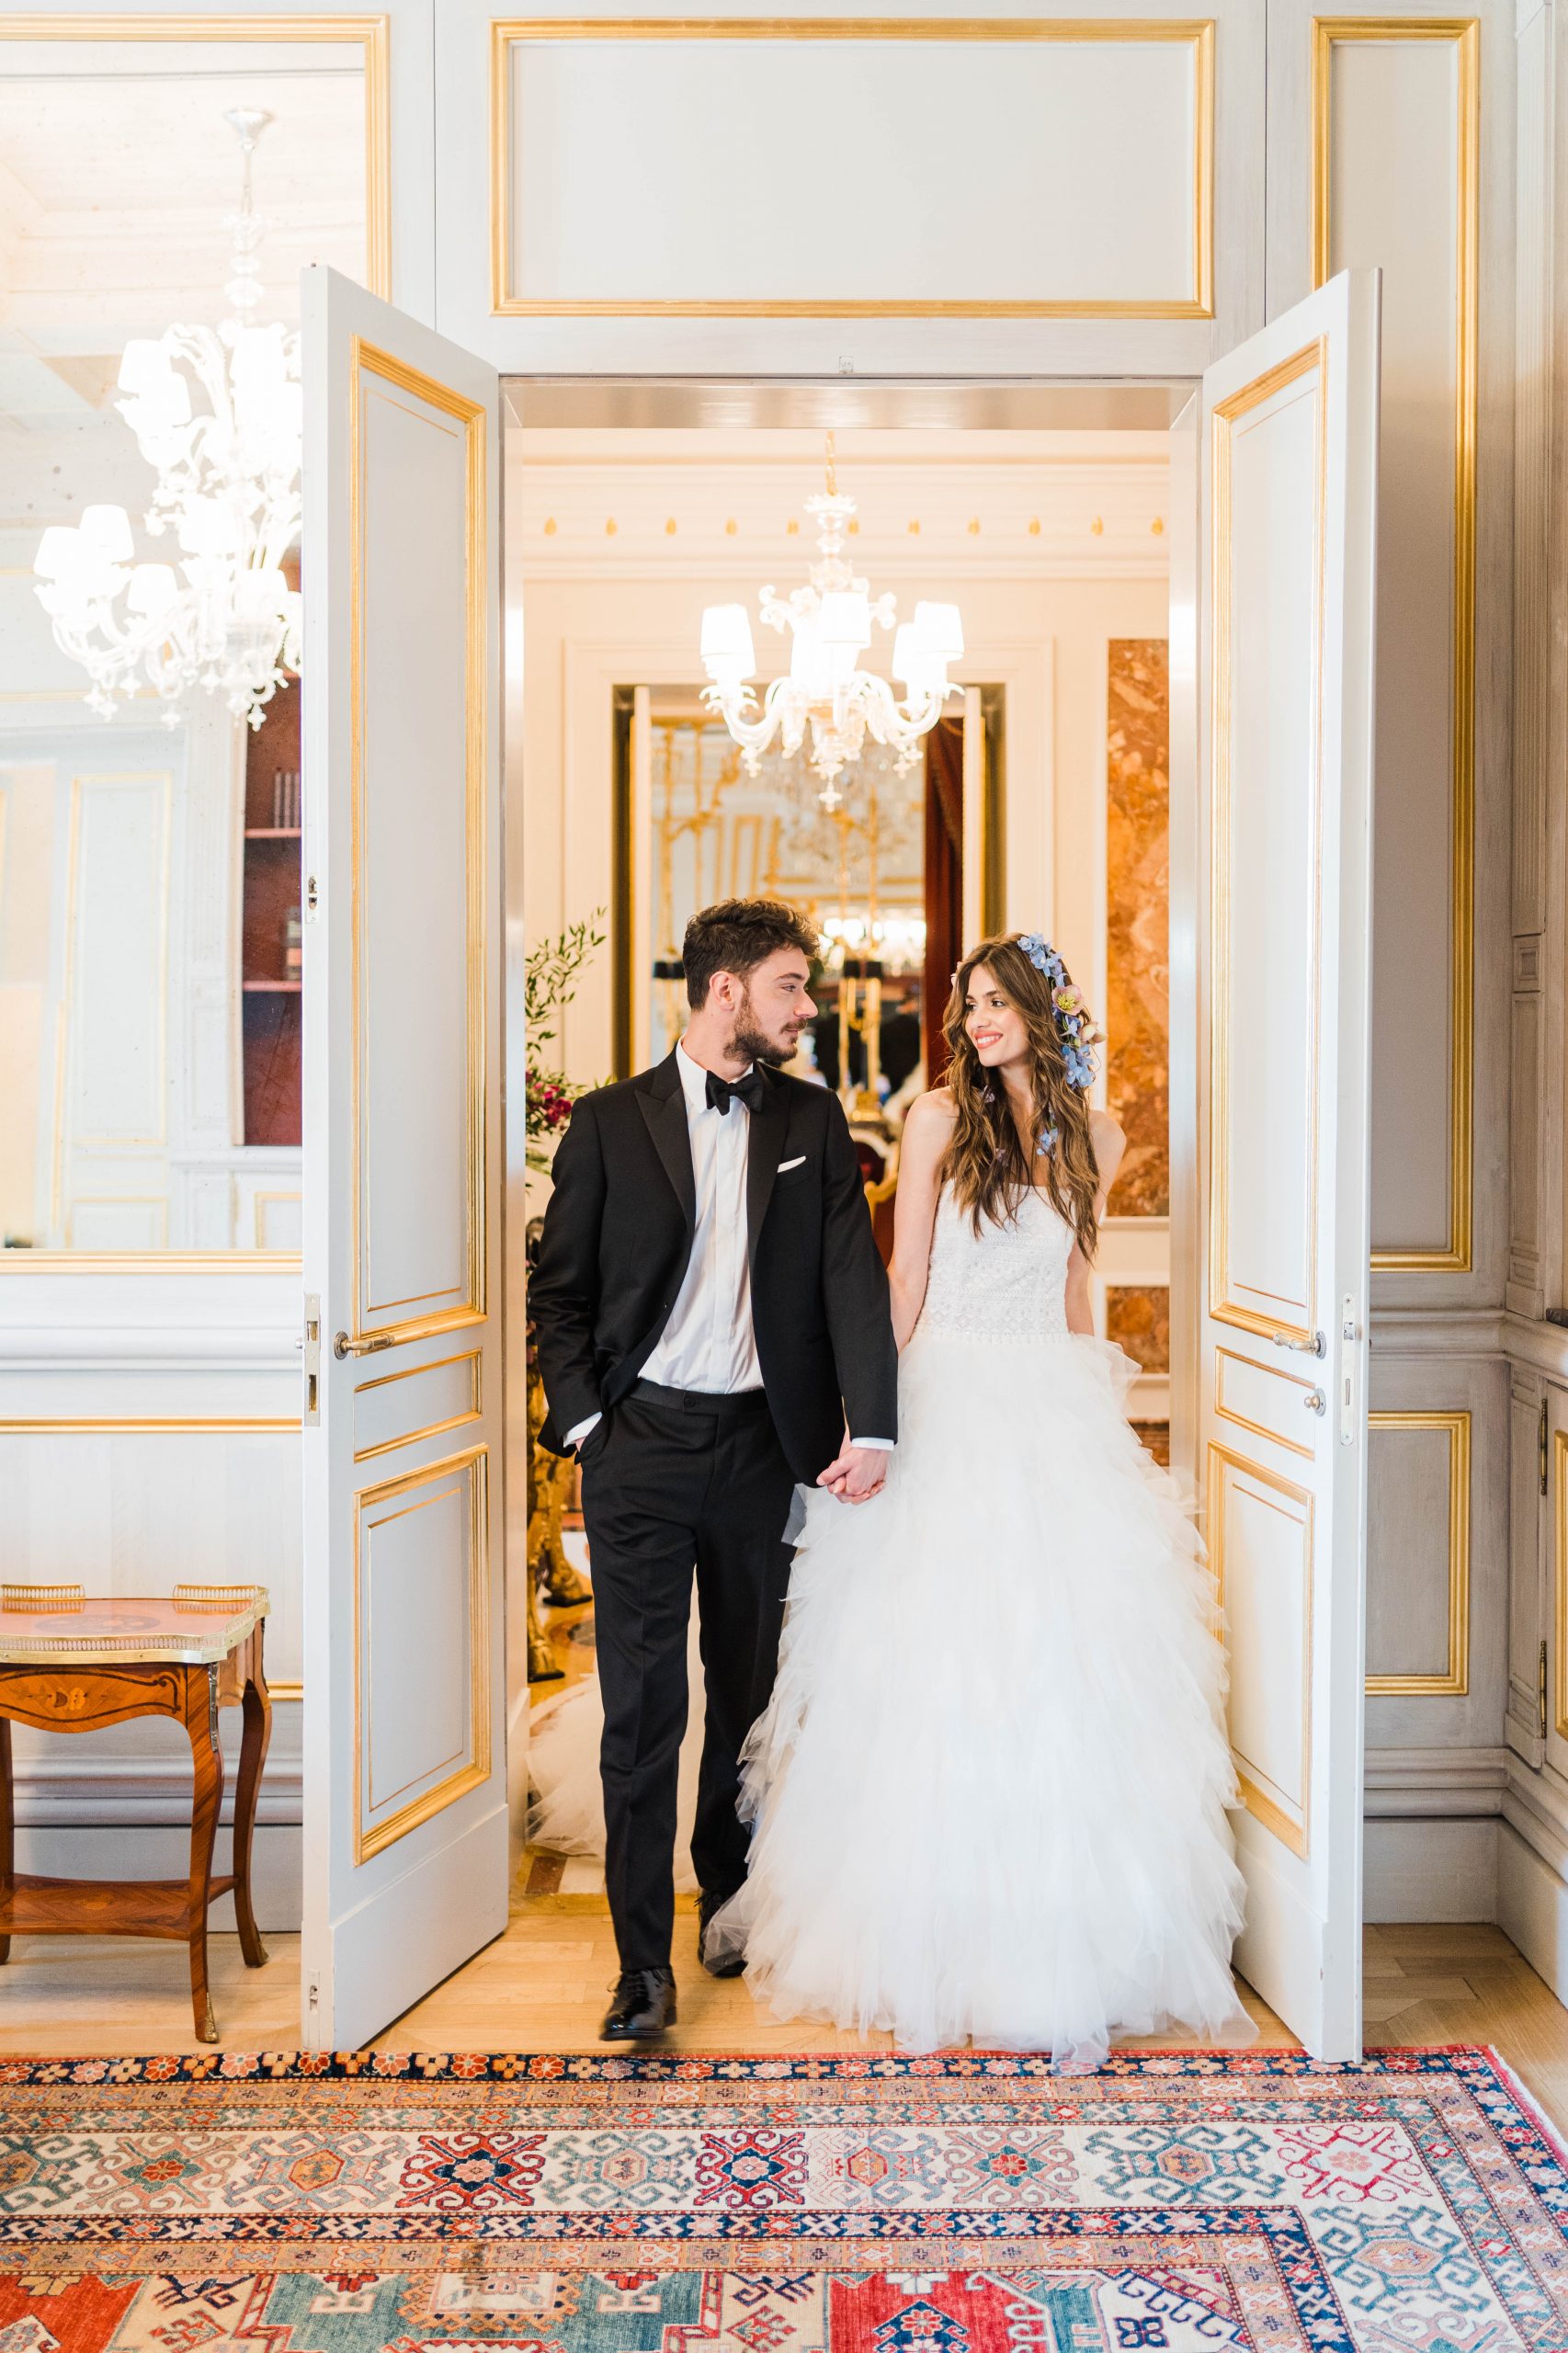 https://malagoliwedding.com/wp-content/uploads/2021/04/St-Regis-Rome-Wedding-photographer-74-scaled.jpg